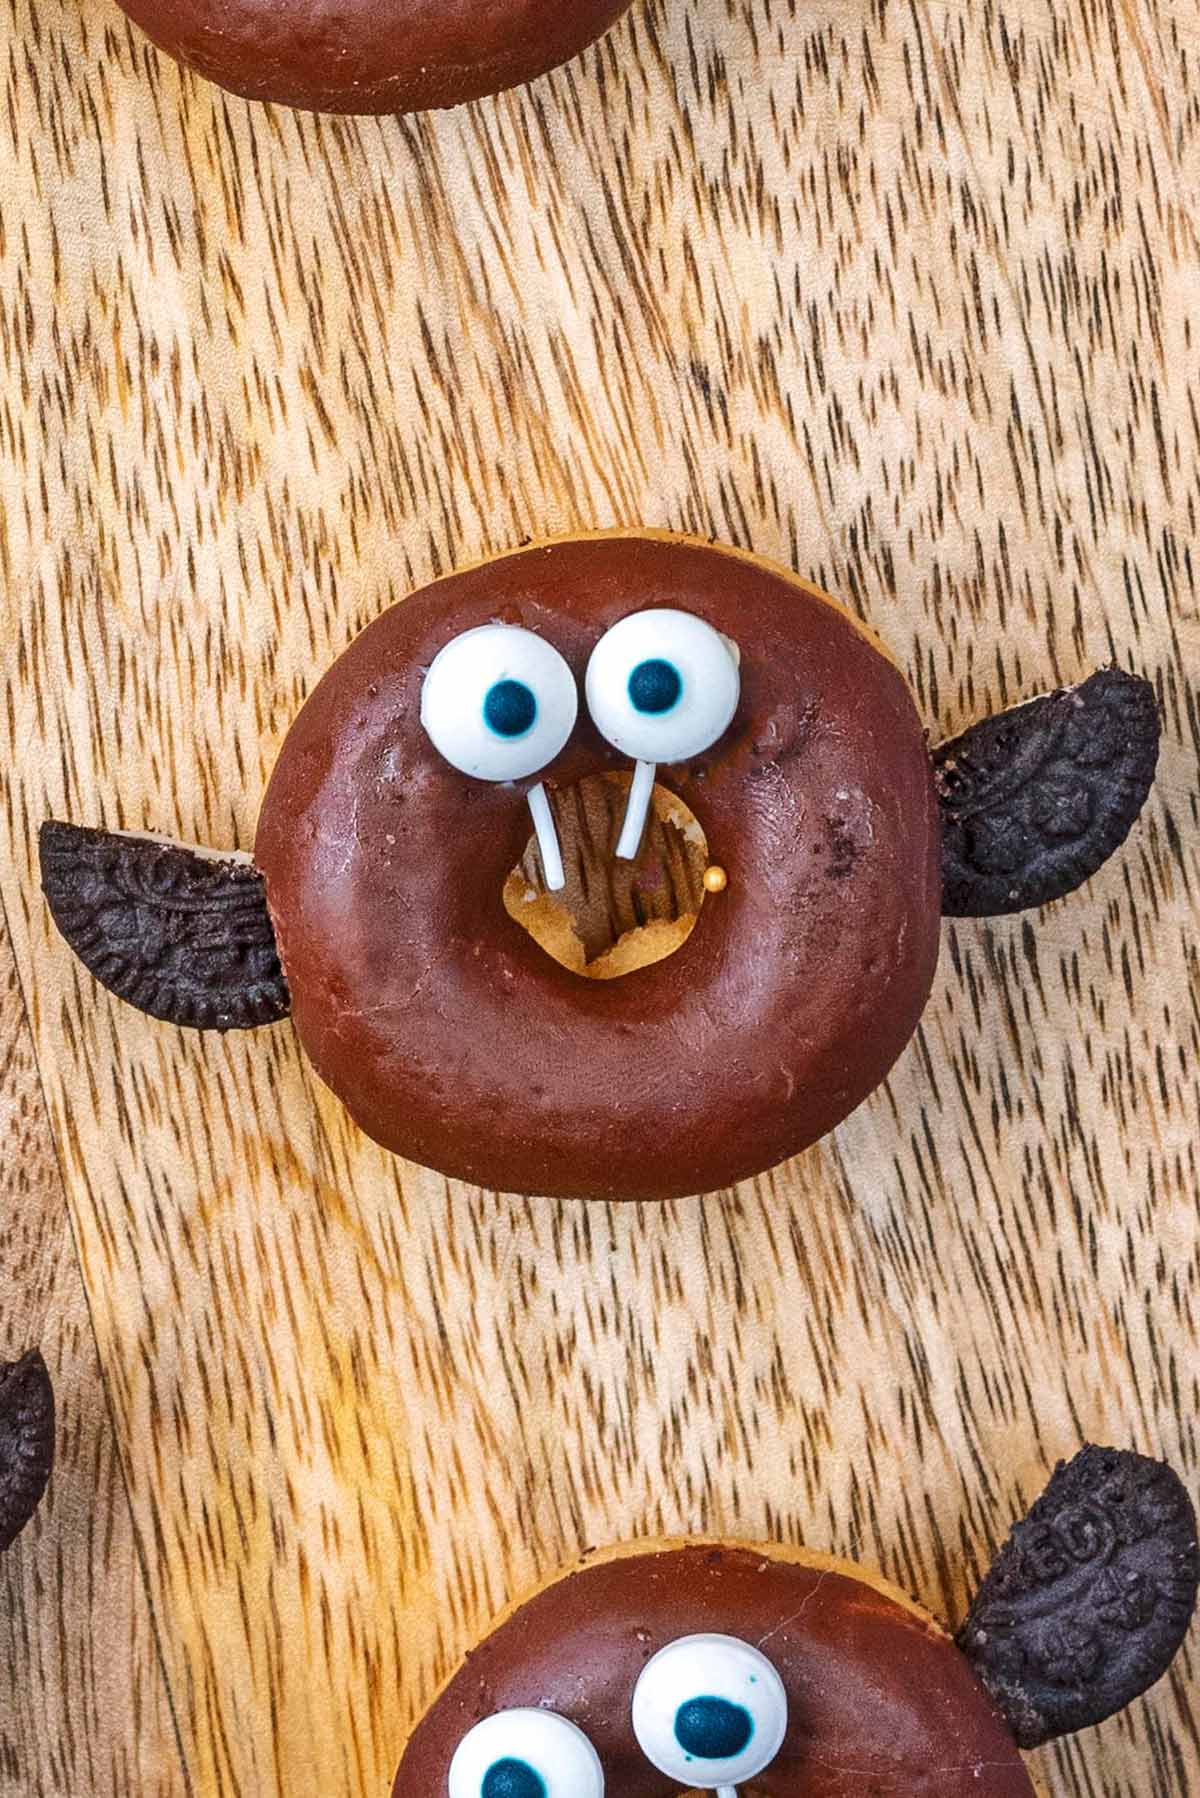 A small chocolate ring doughnut decorated like a vampire bat.